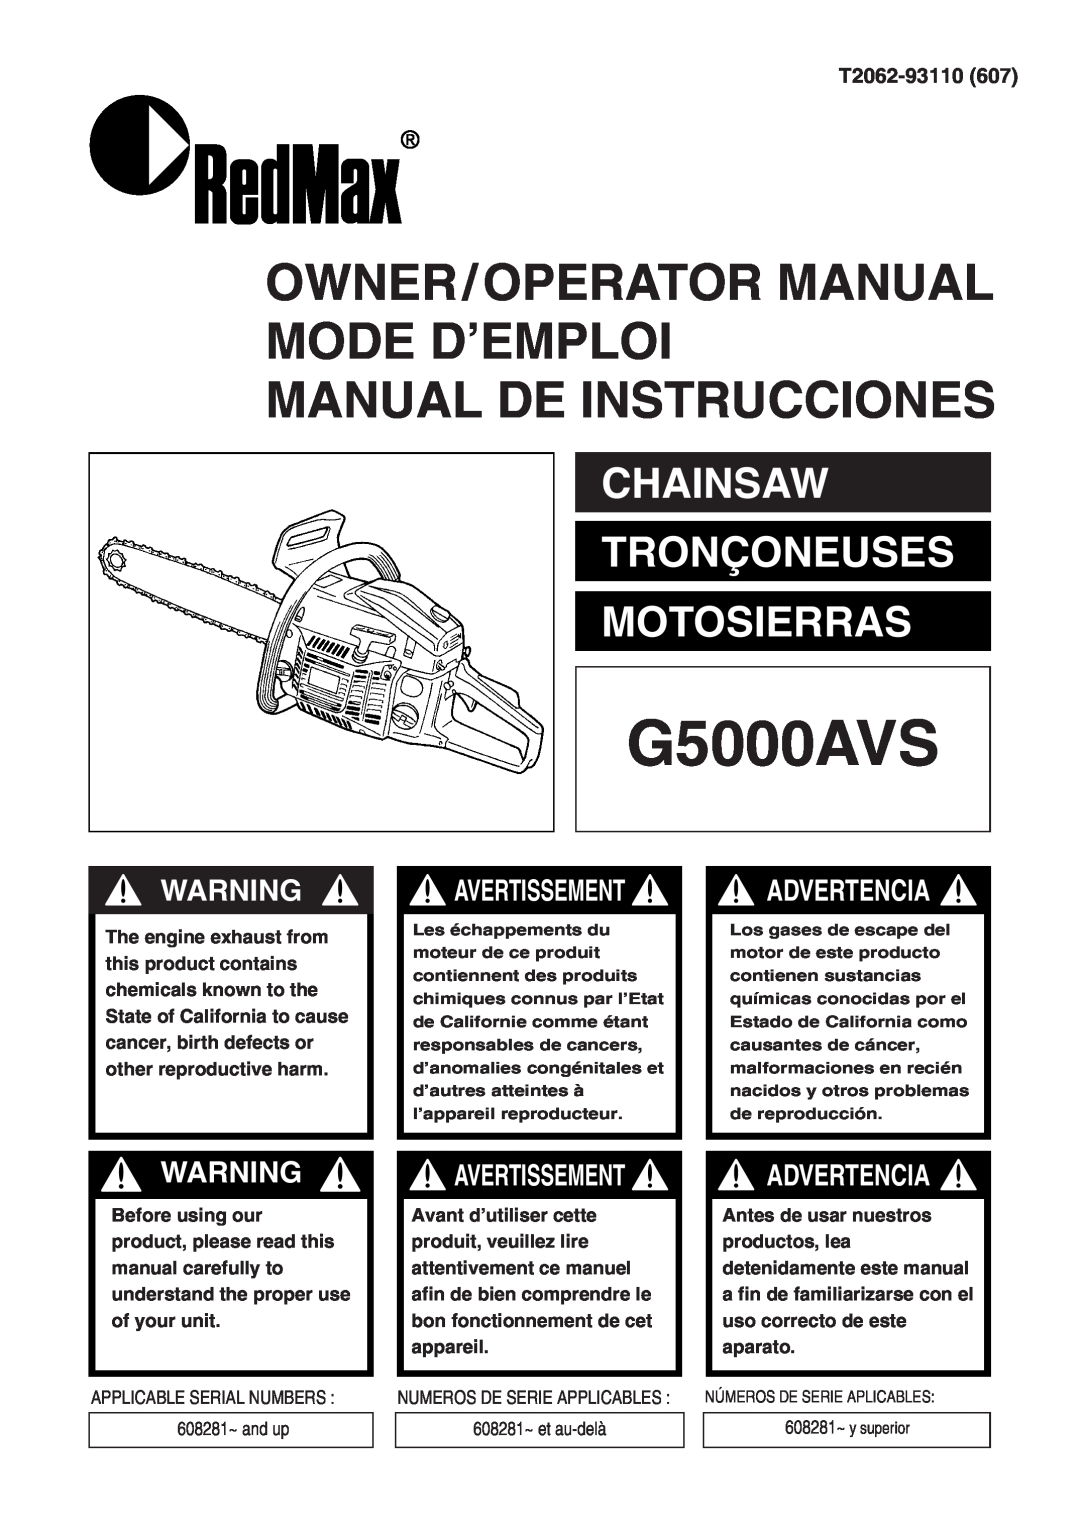 RedMax G5000AVS manual Owner/Operator Manual Mode D’Emploi Manual De Instrucciones, Chainsaw Tronçoneuses Motosierras 